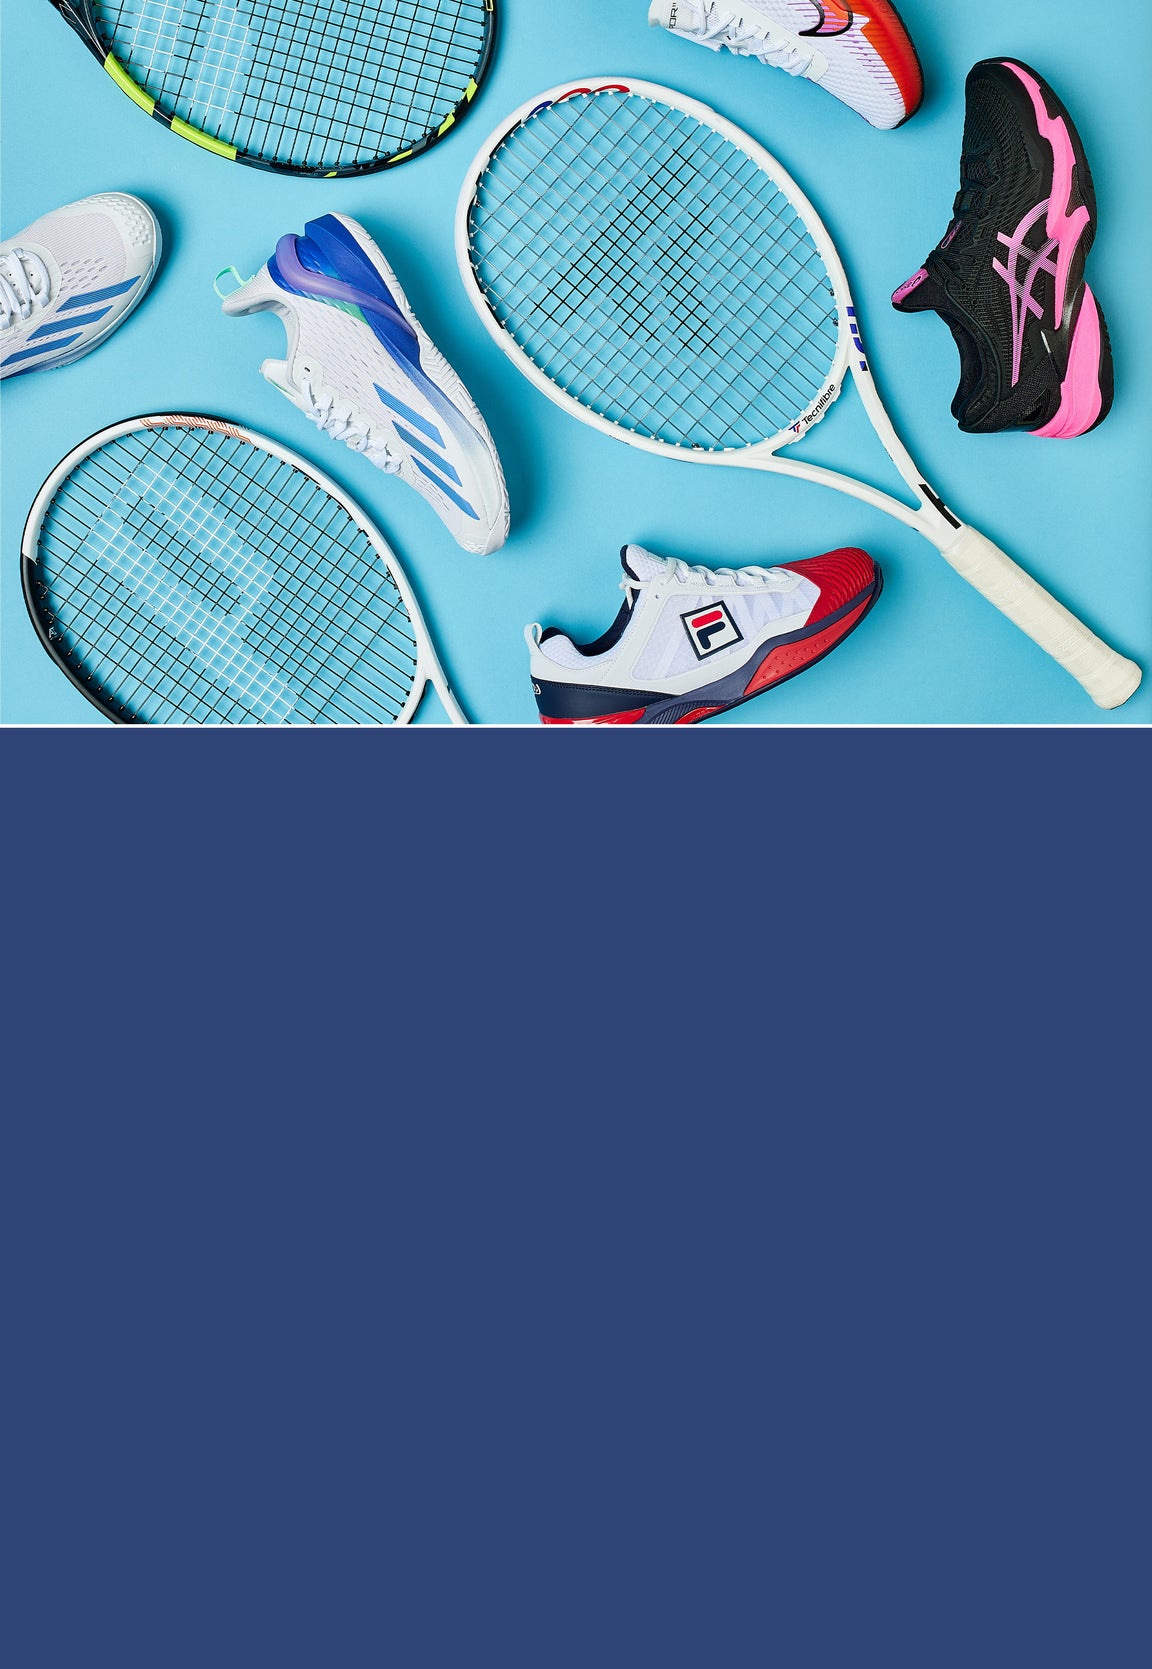 USPTA Member Page Tennis Warehouse